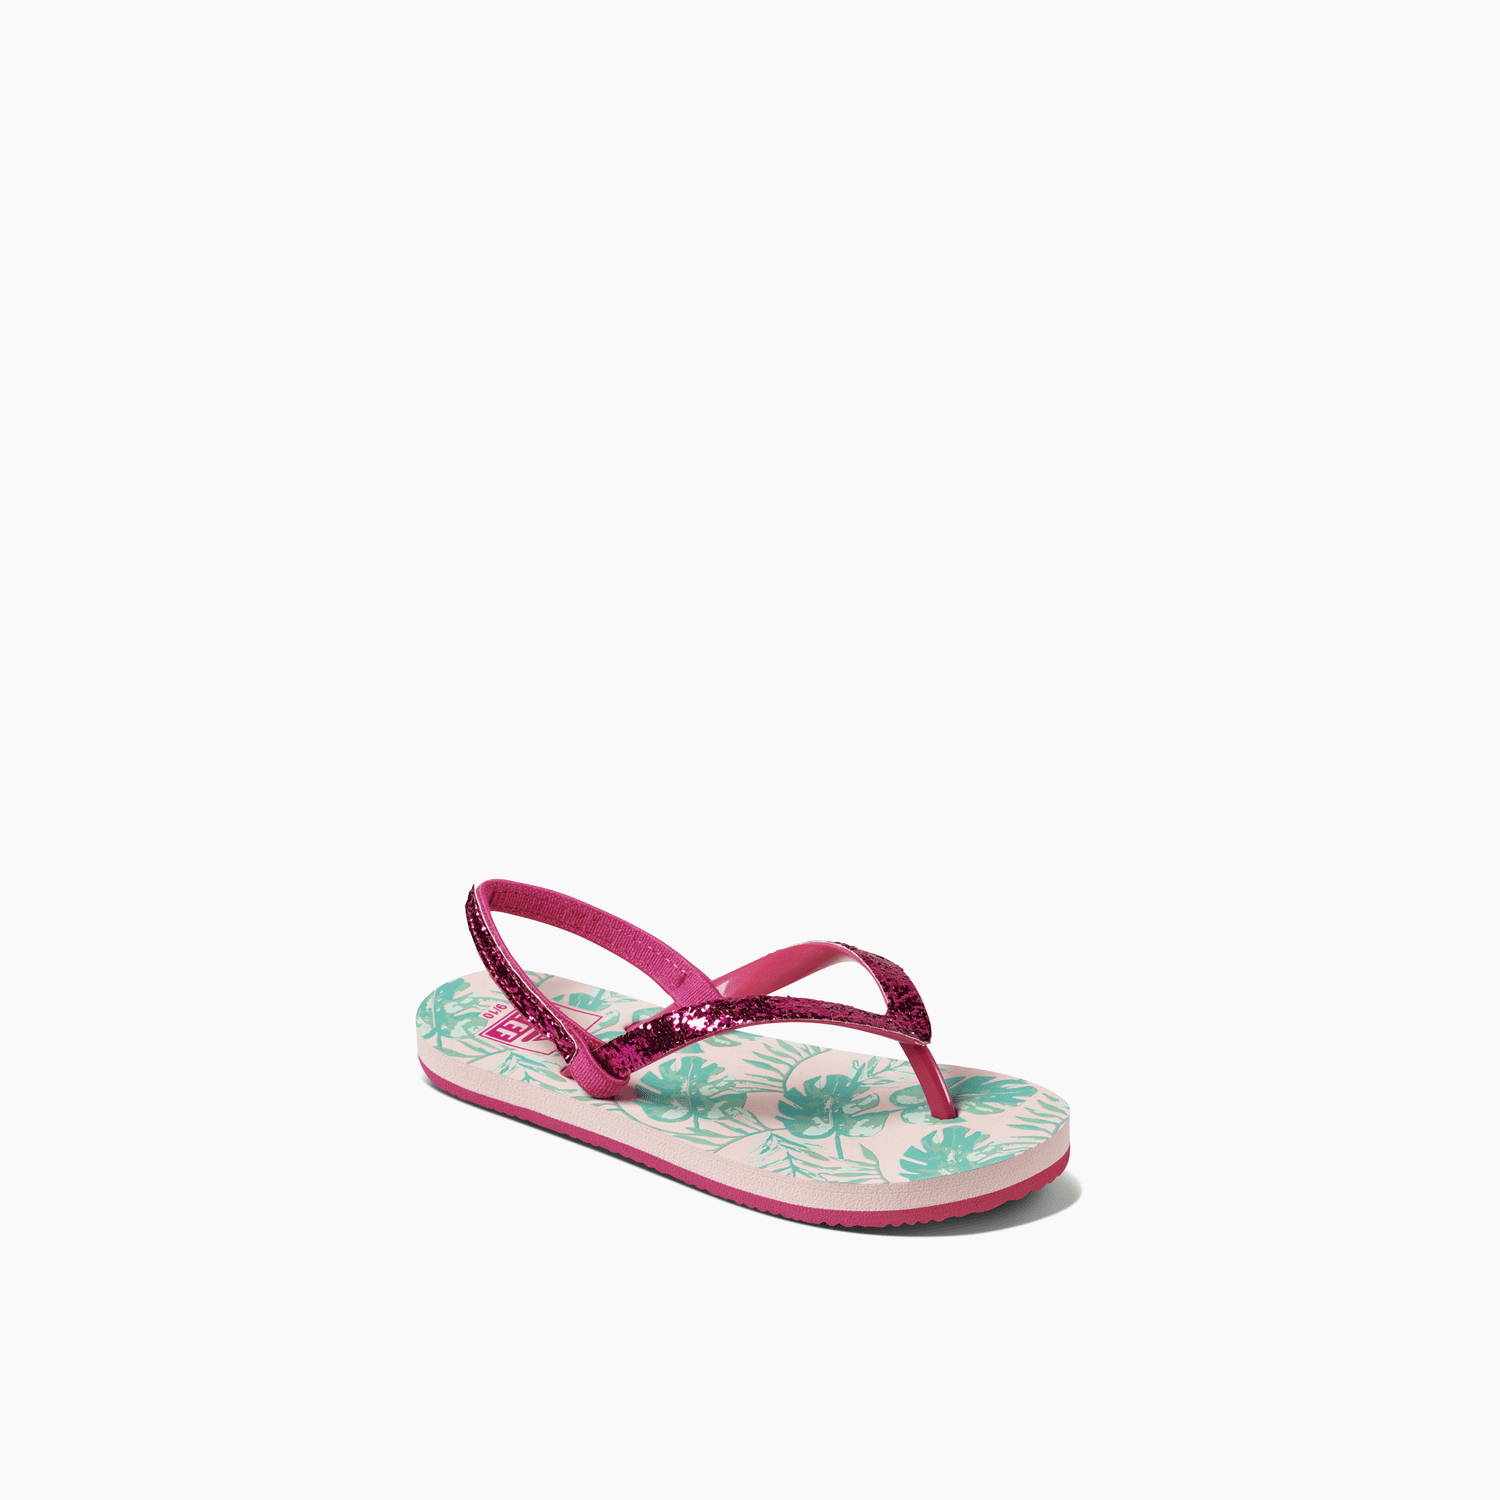 Reef Kids Sandals ~ Little Stargazer Prints Paradise - Walmart.com